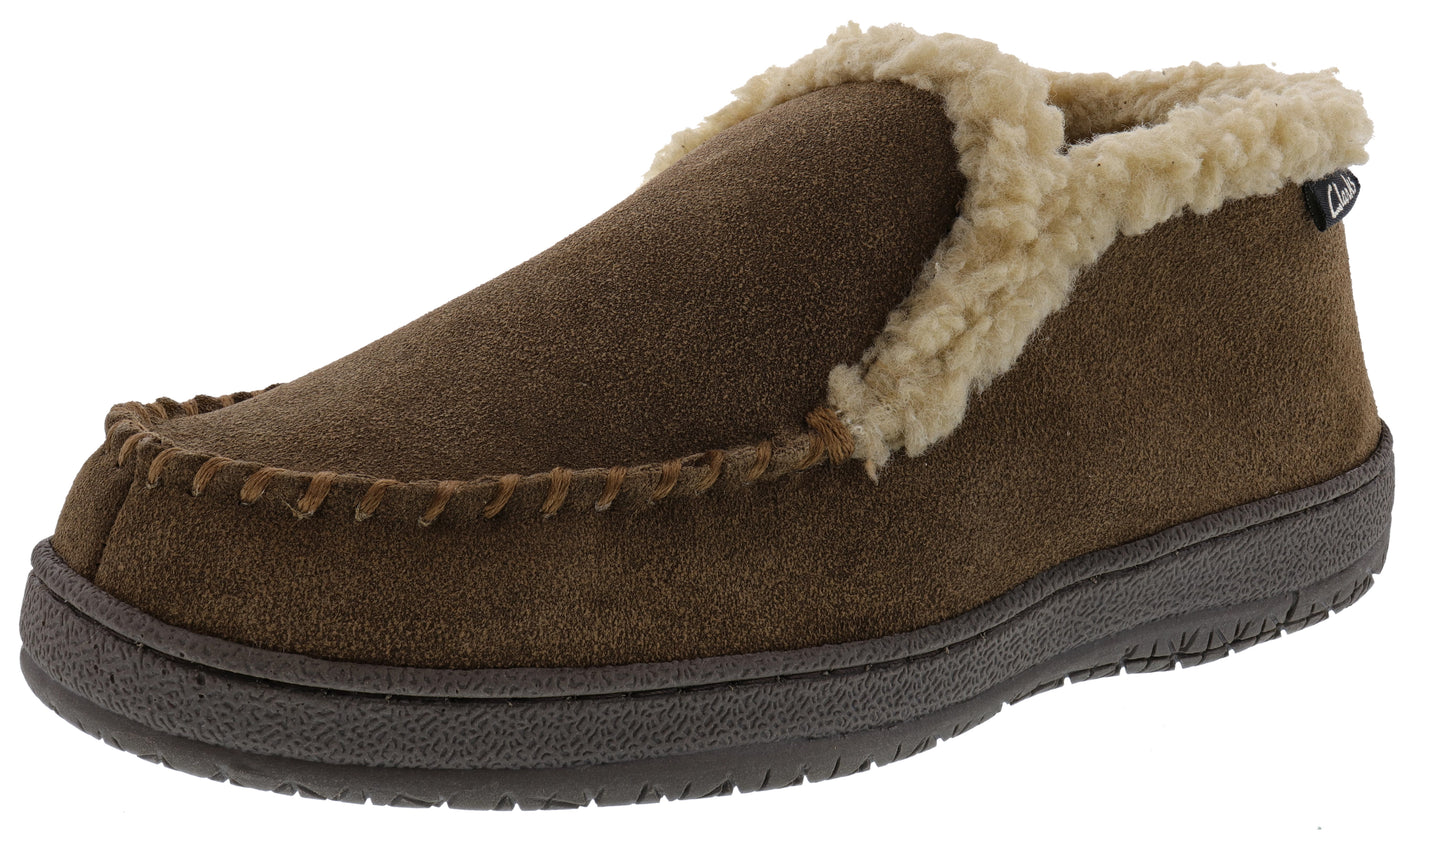 Shop for Comfortable Slippers Mocassins for Men Online | ShoeCity ...